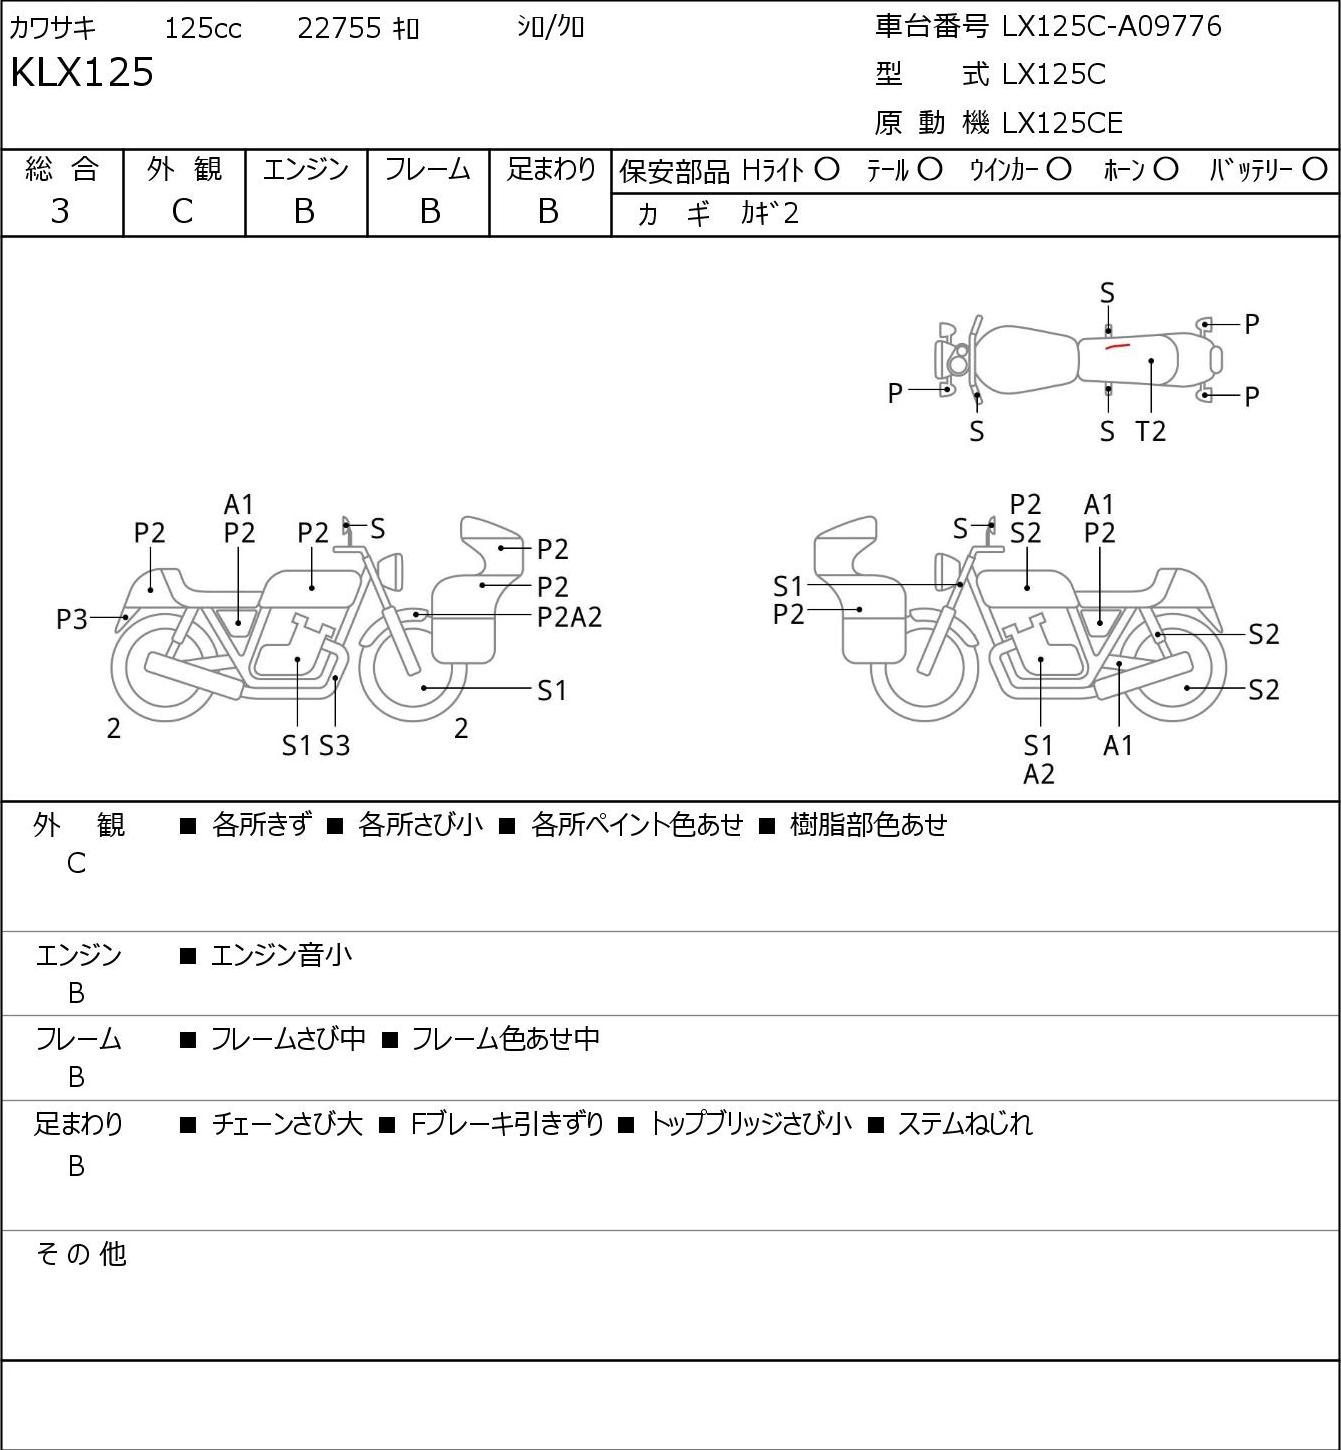 Kawasaki KLX 125 LX125C г. 22755